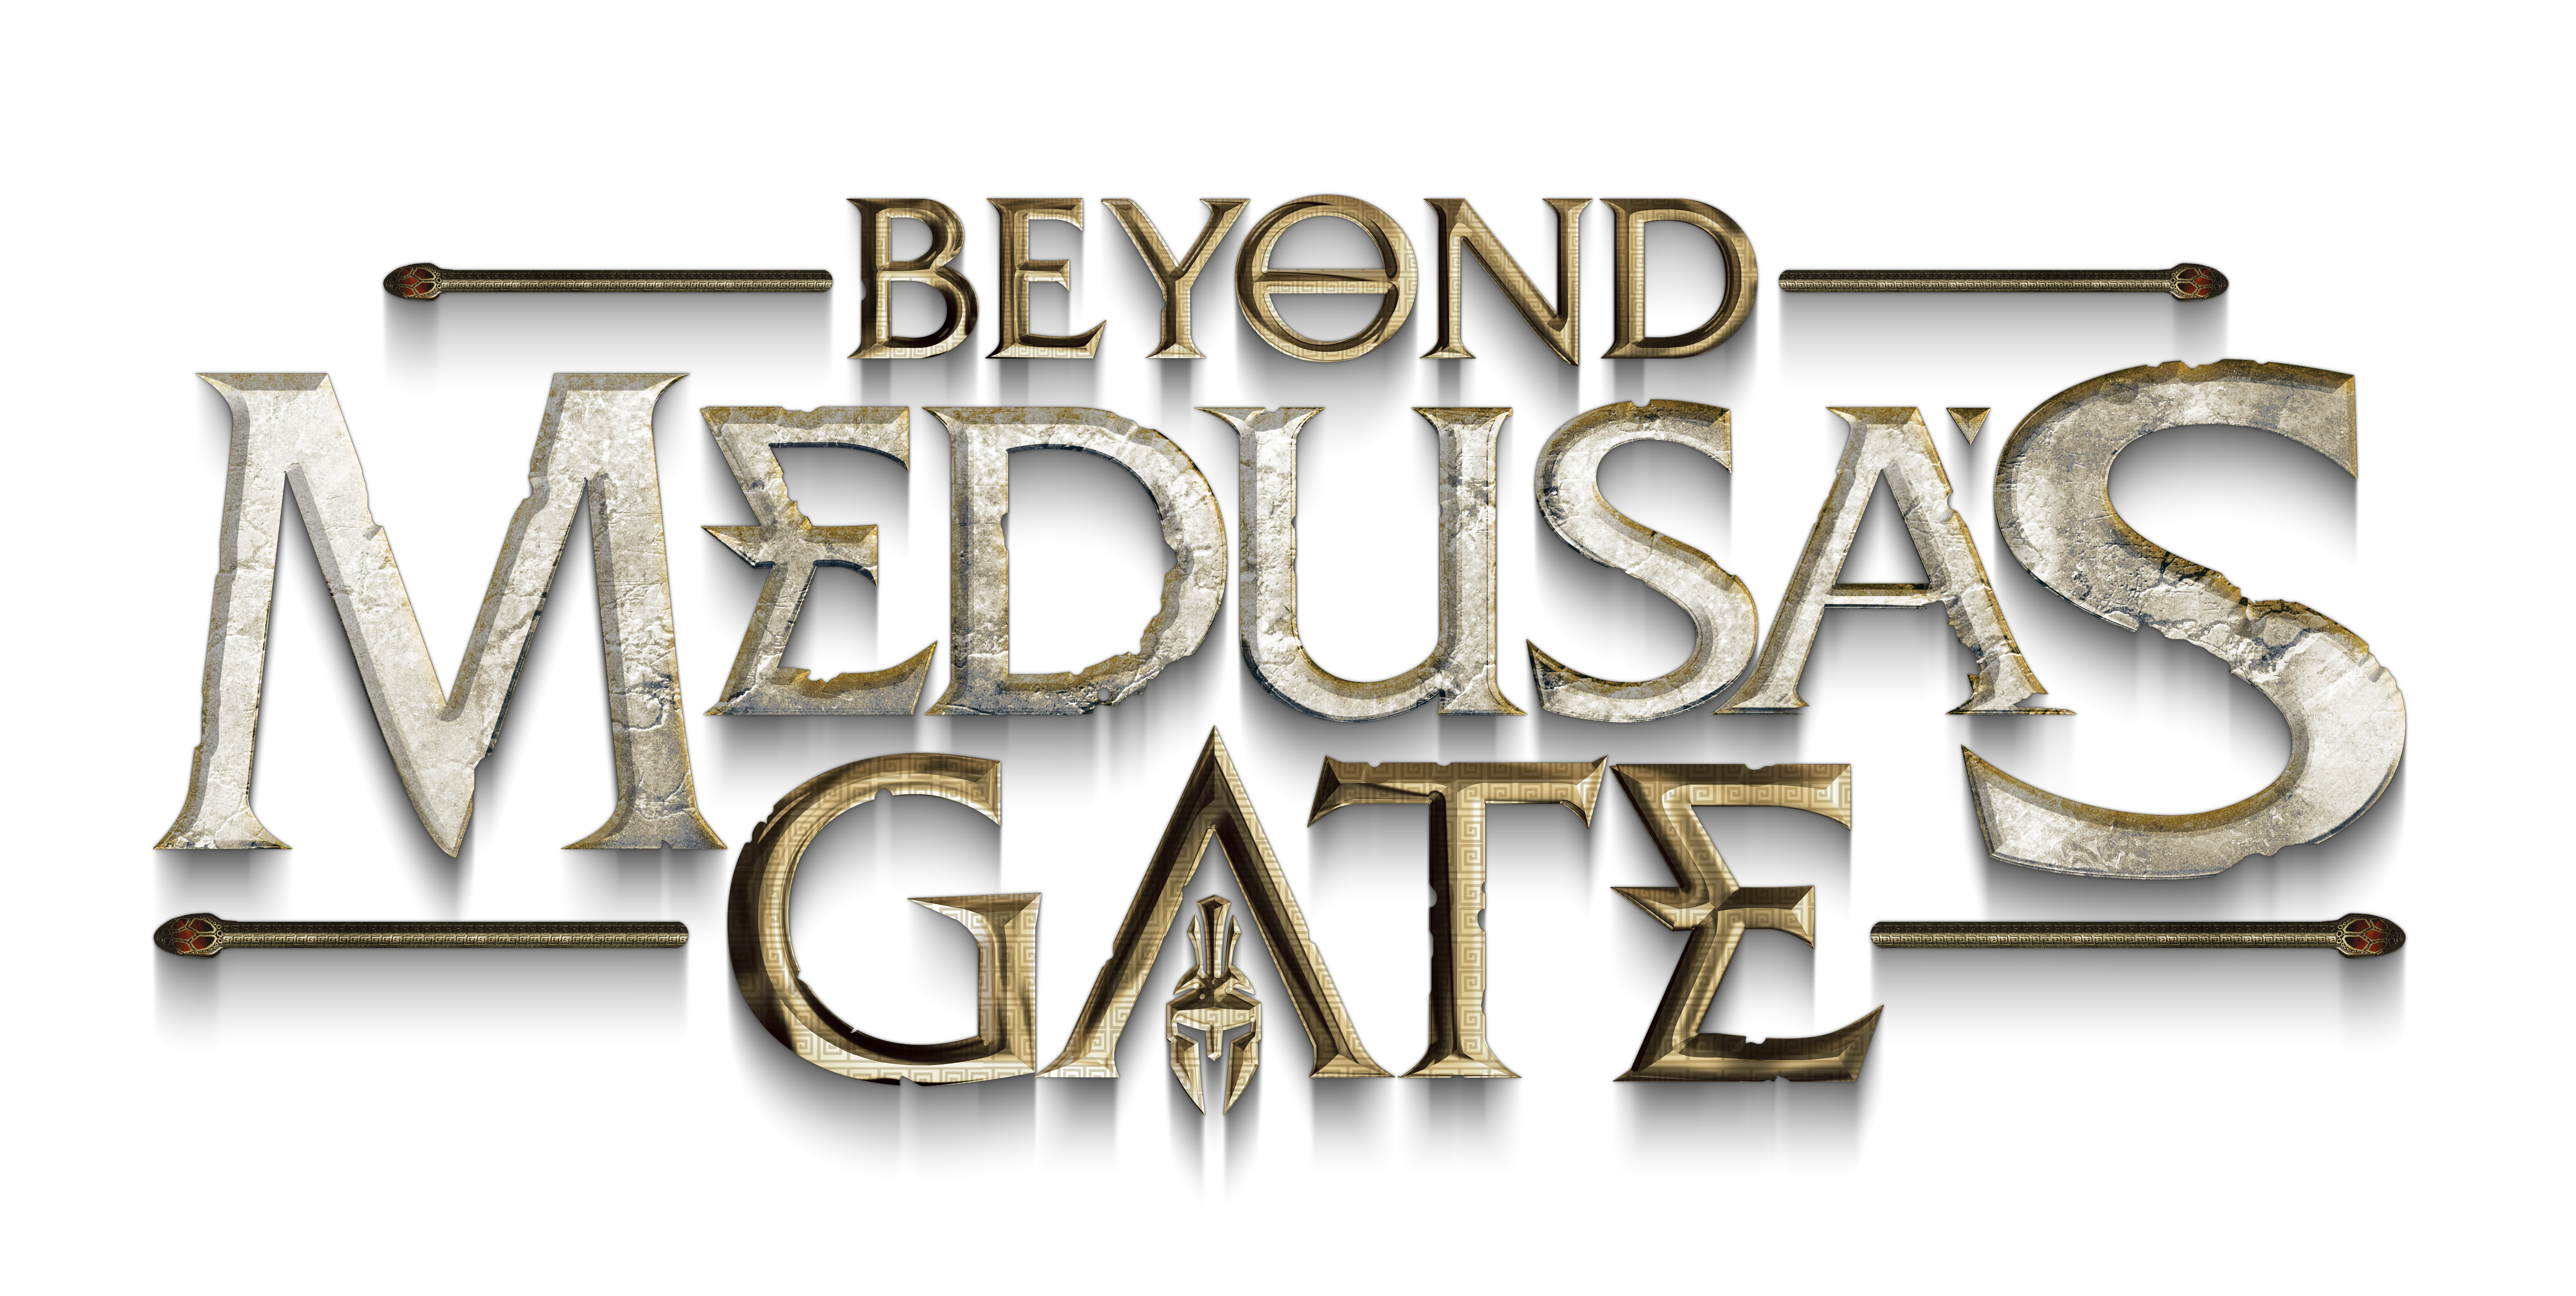 Beyond Medusa's Gate screencap (Ubisoft)